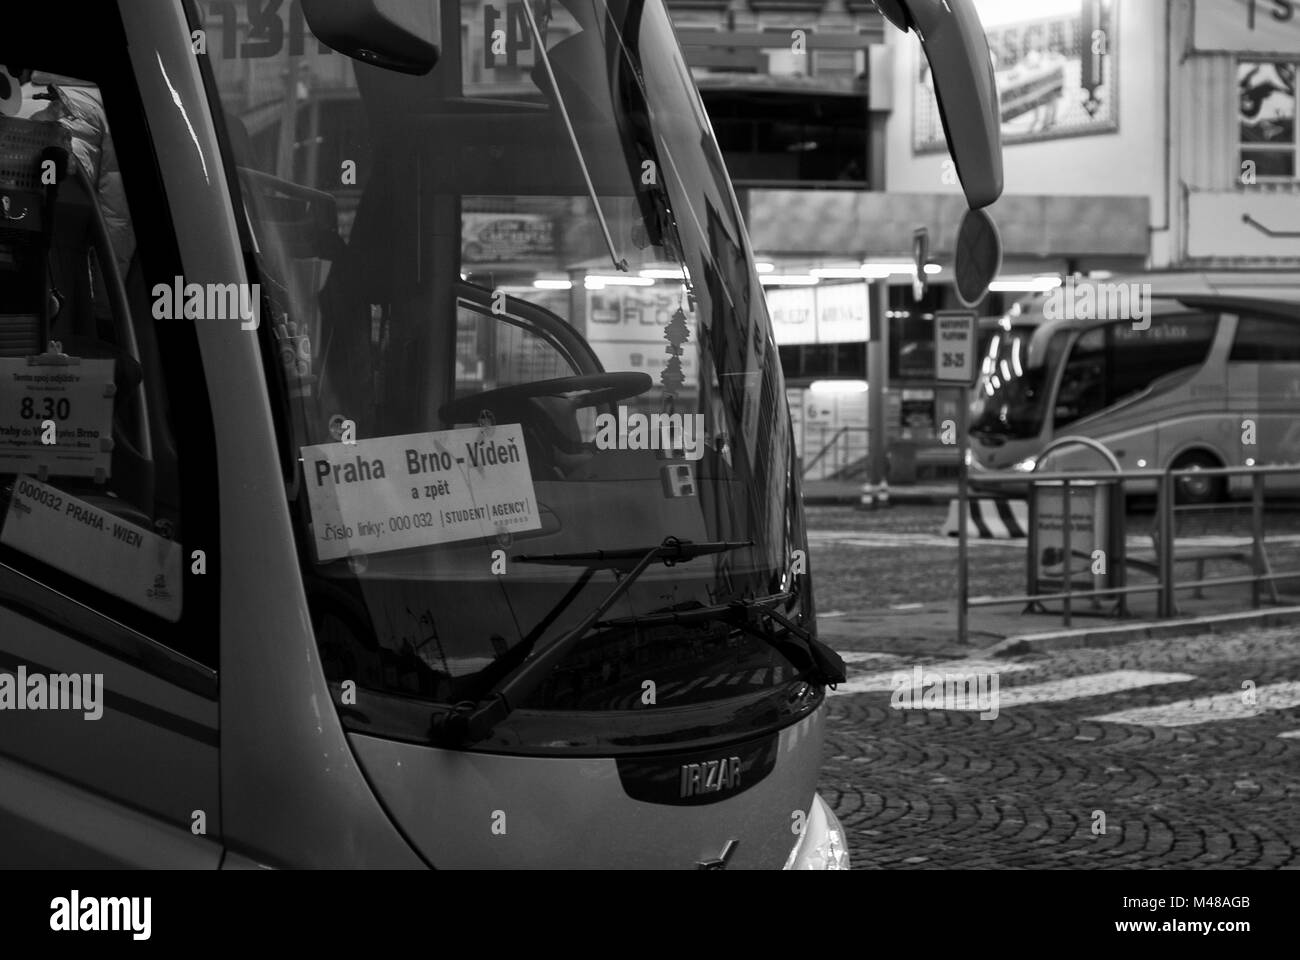 Fernbusse im Prager Busbahnhof Florenc Foto Stock